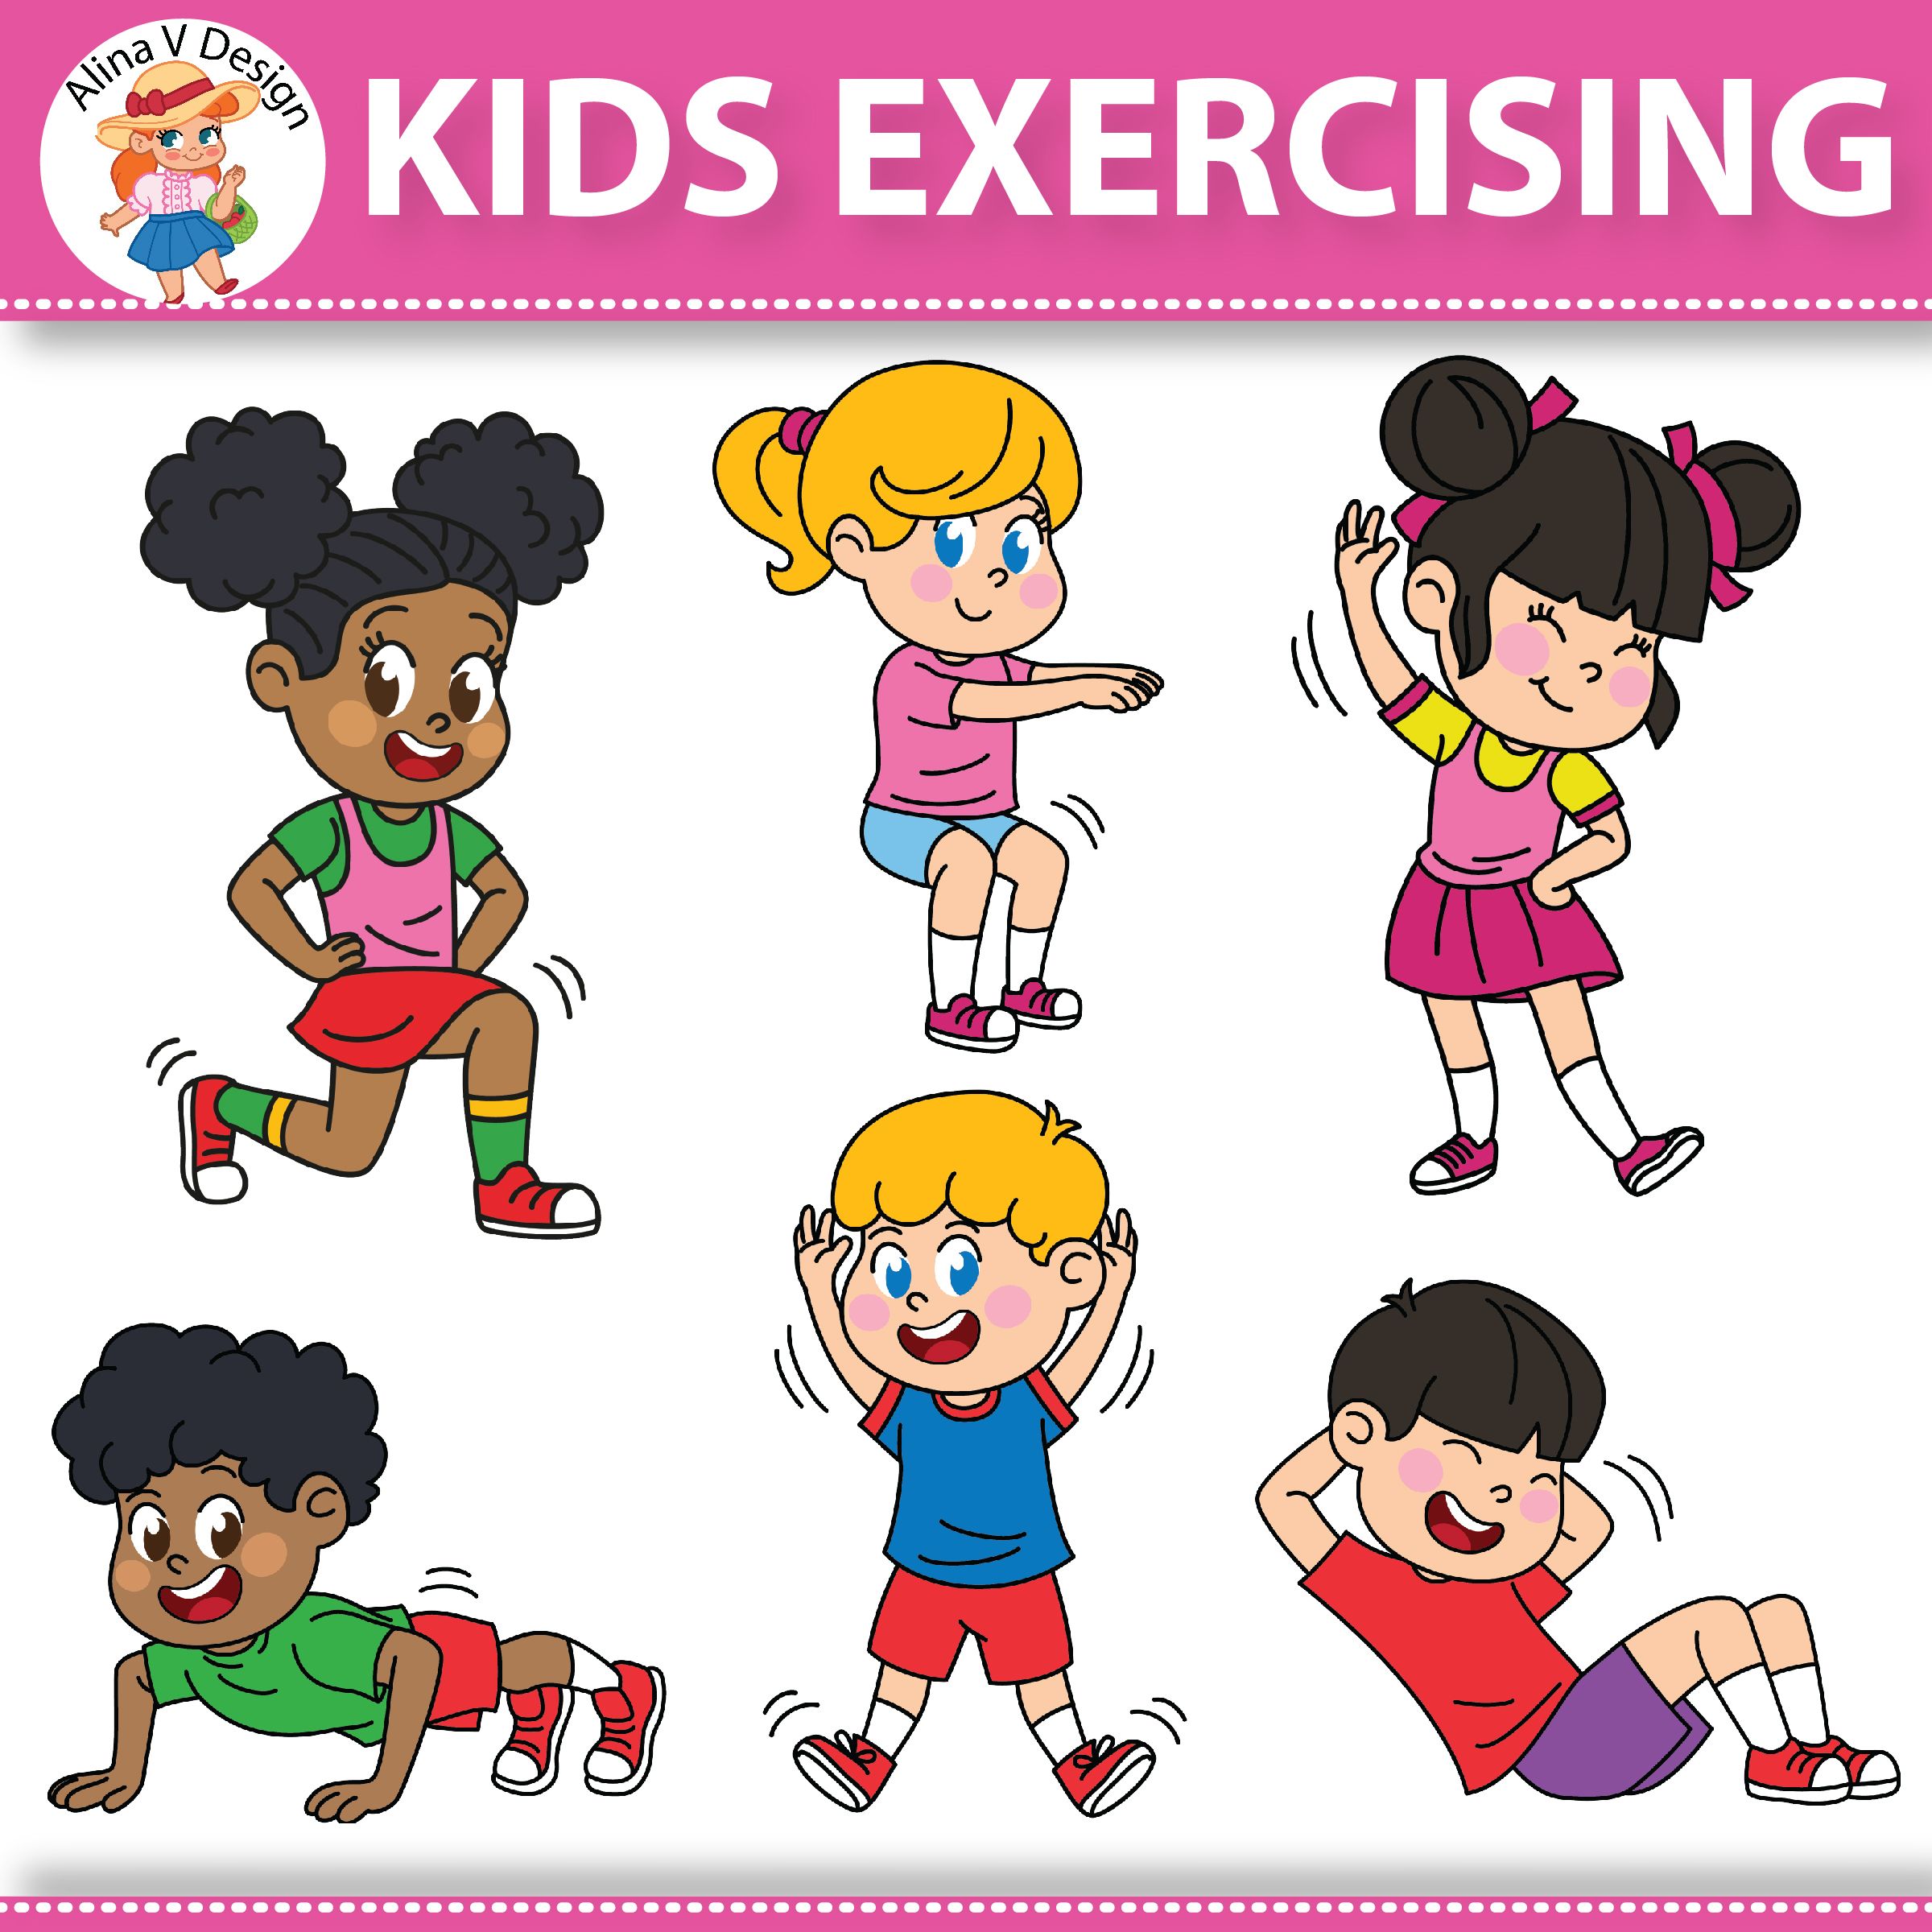 Kids exercising exercises.